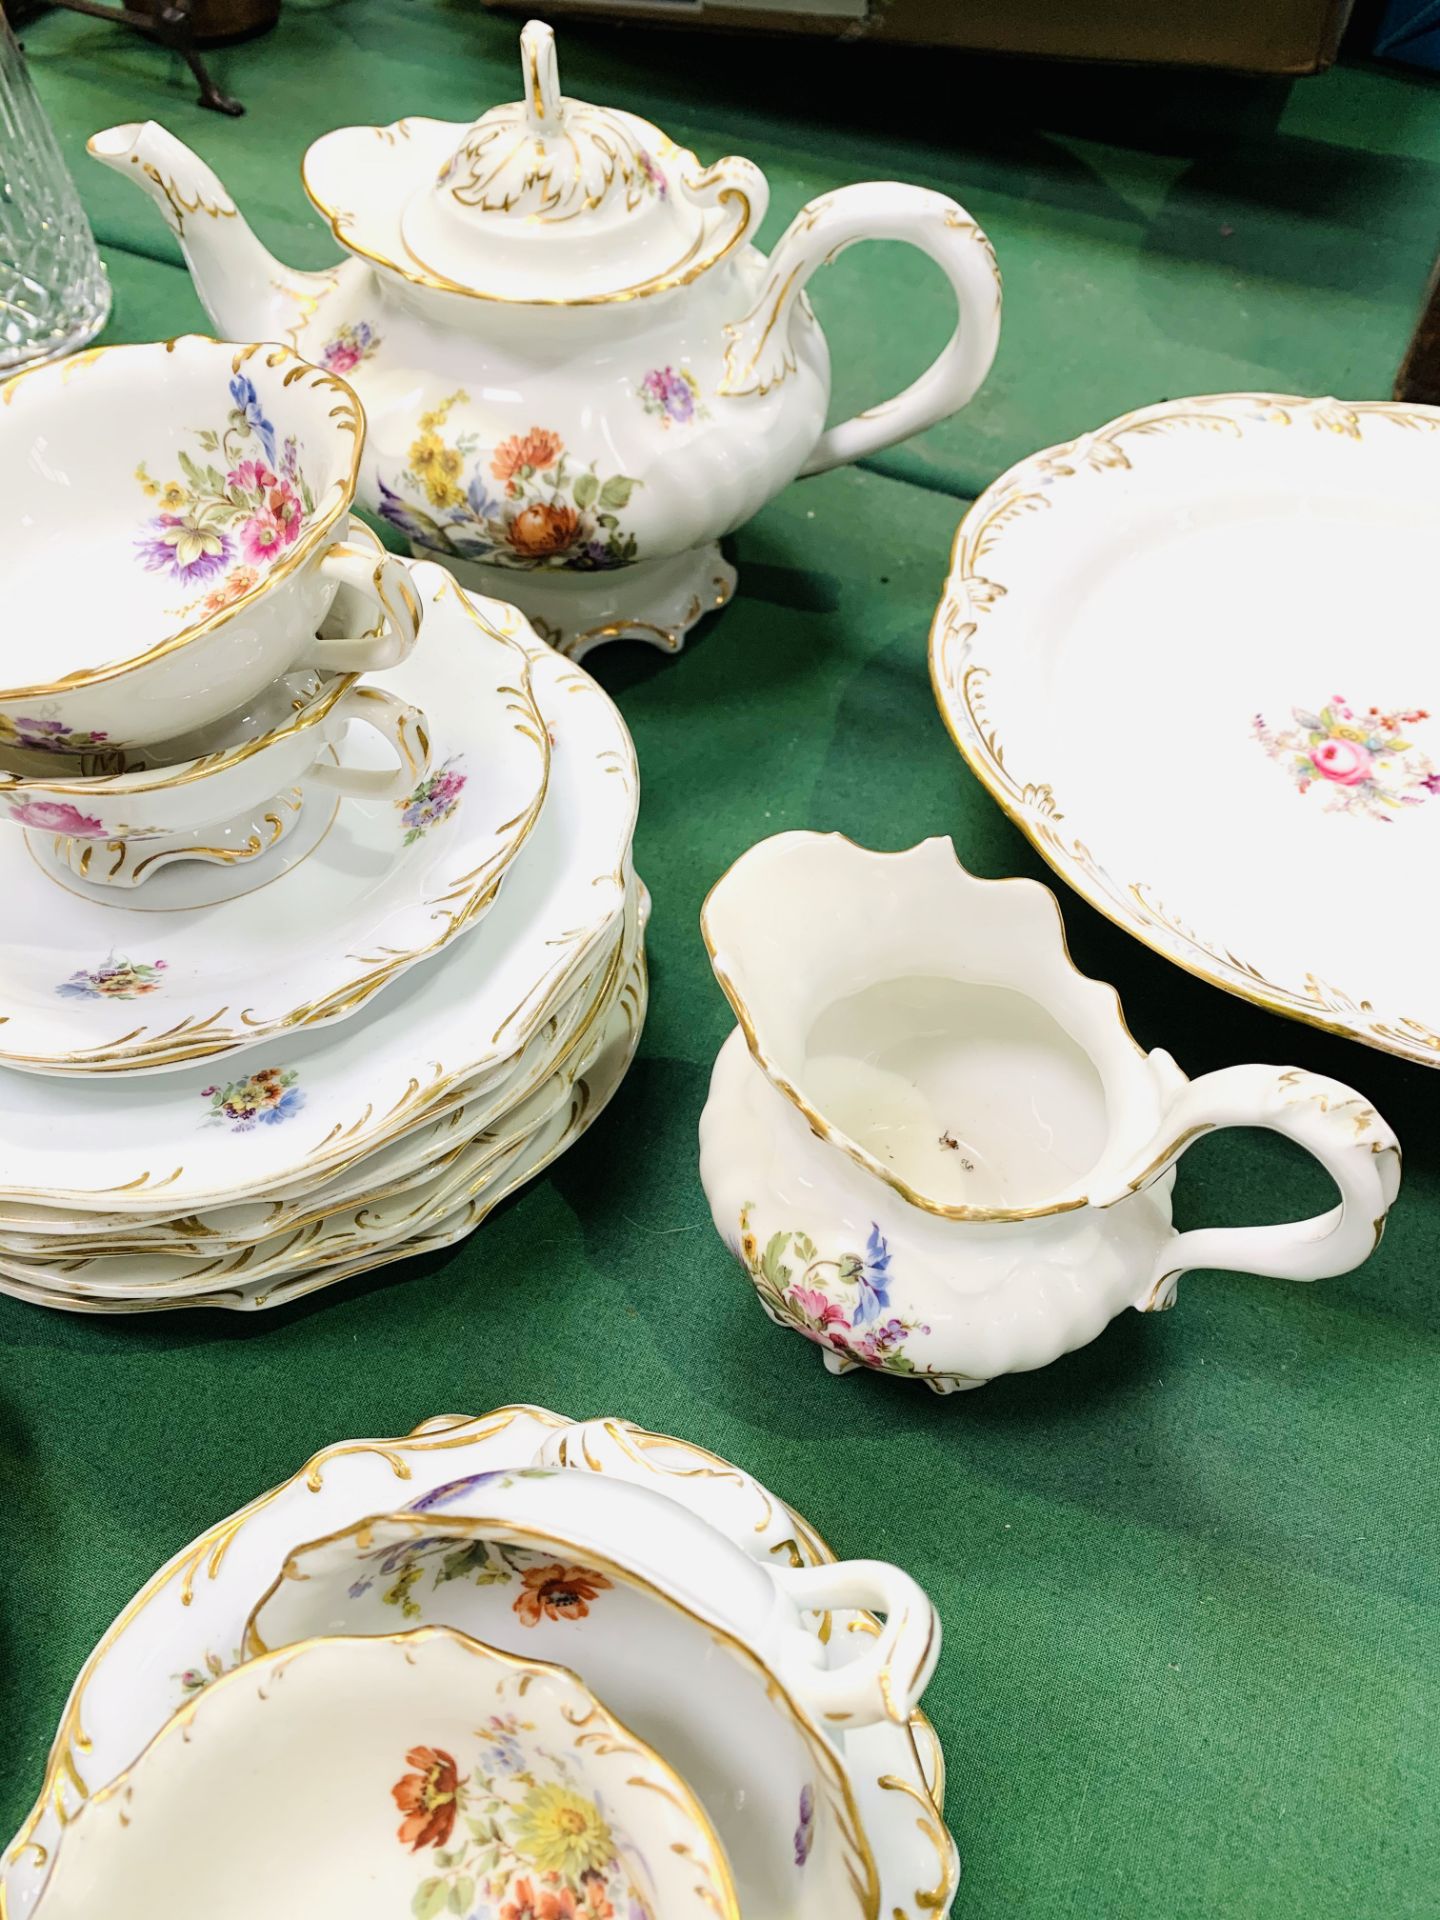 Decorative china tea set. - Image 2 of 3